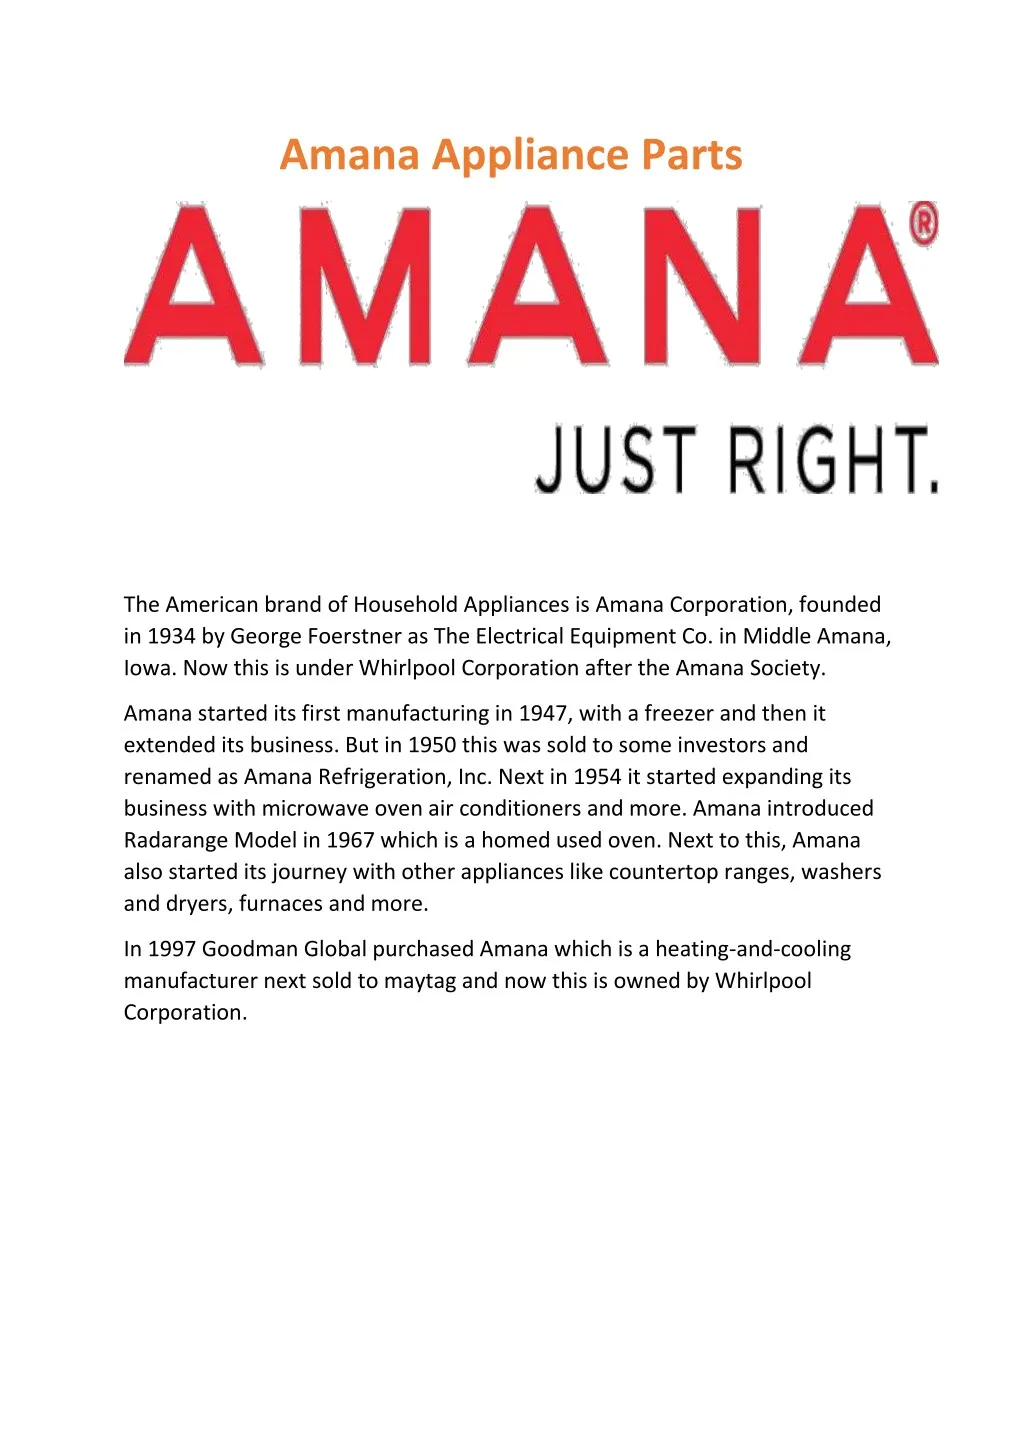 amana appliance parts